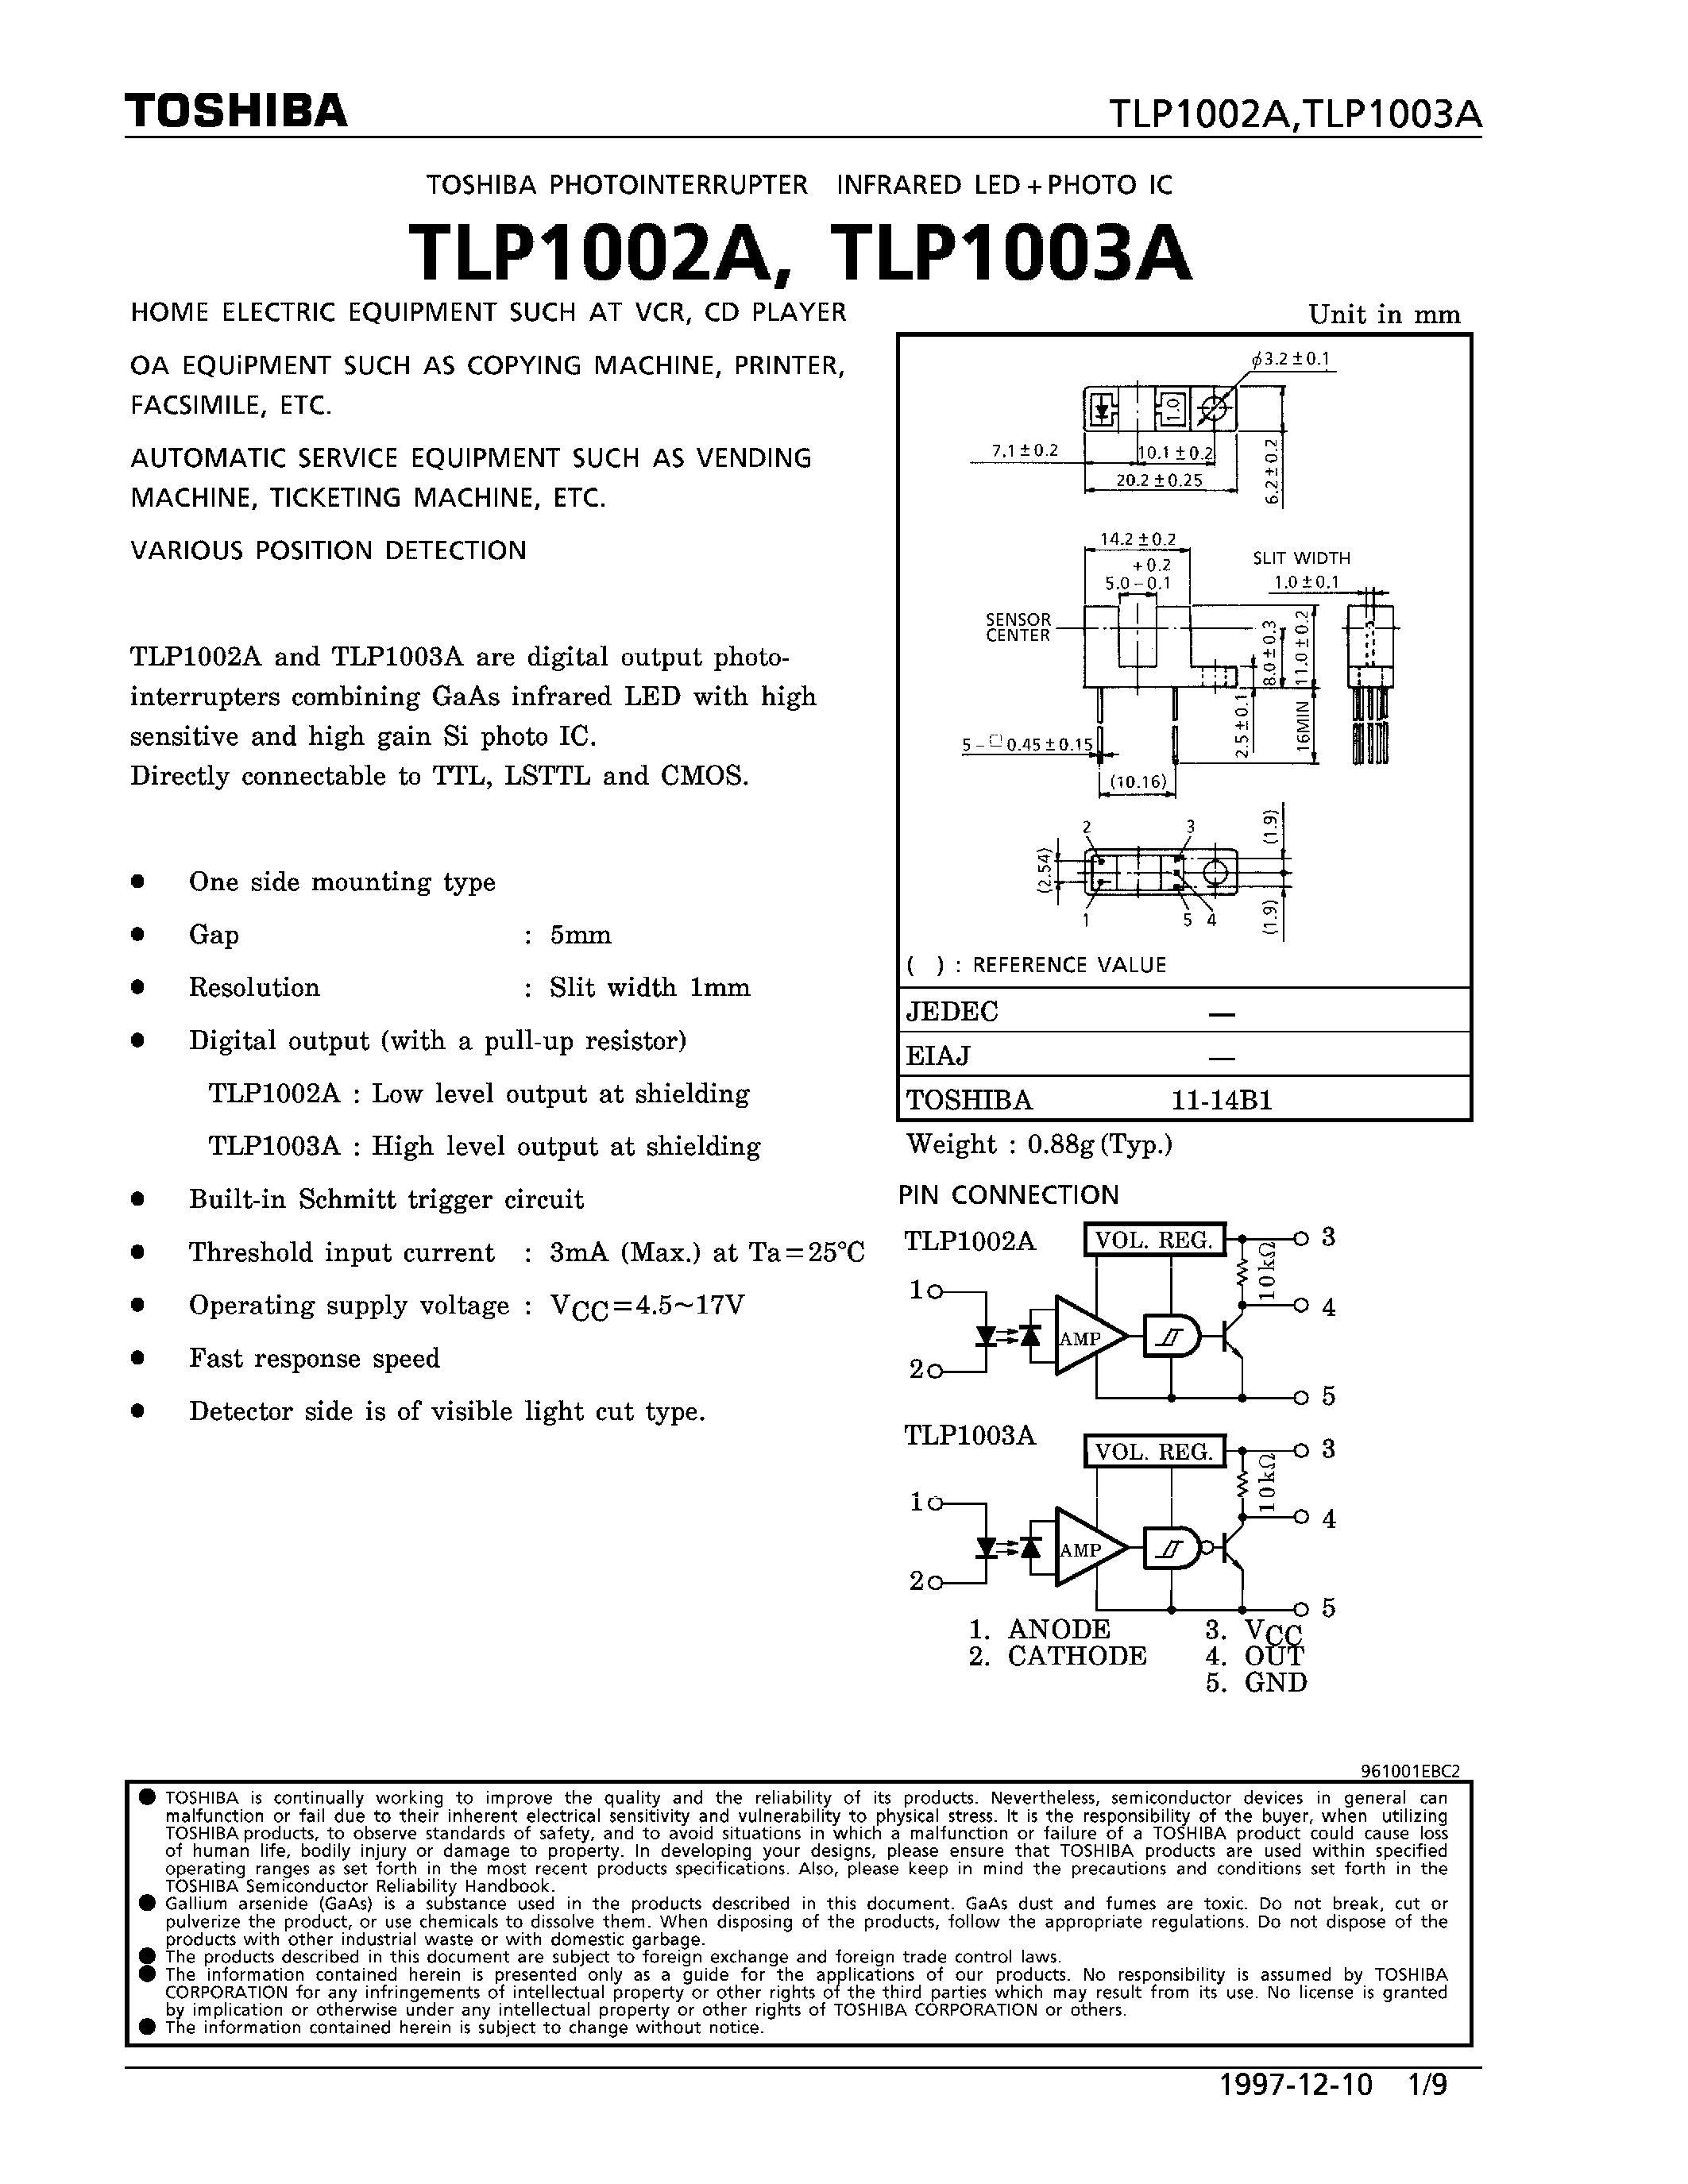 Даташит TLP1002A - INFRARED LED + PHOTO IC страница 1